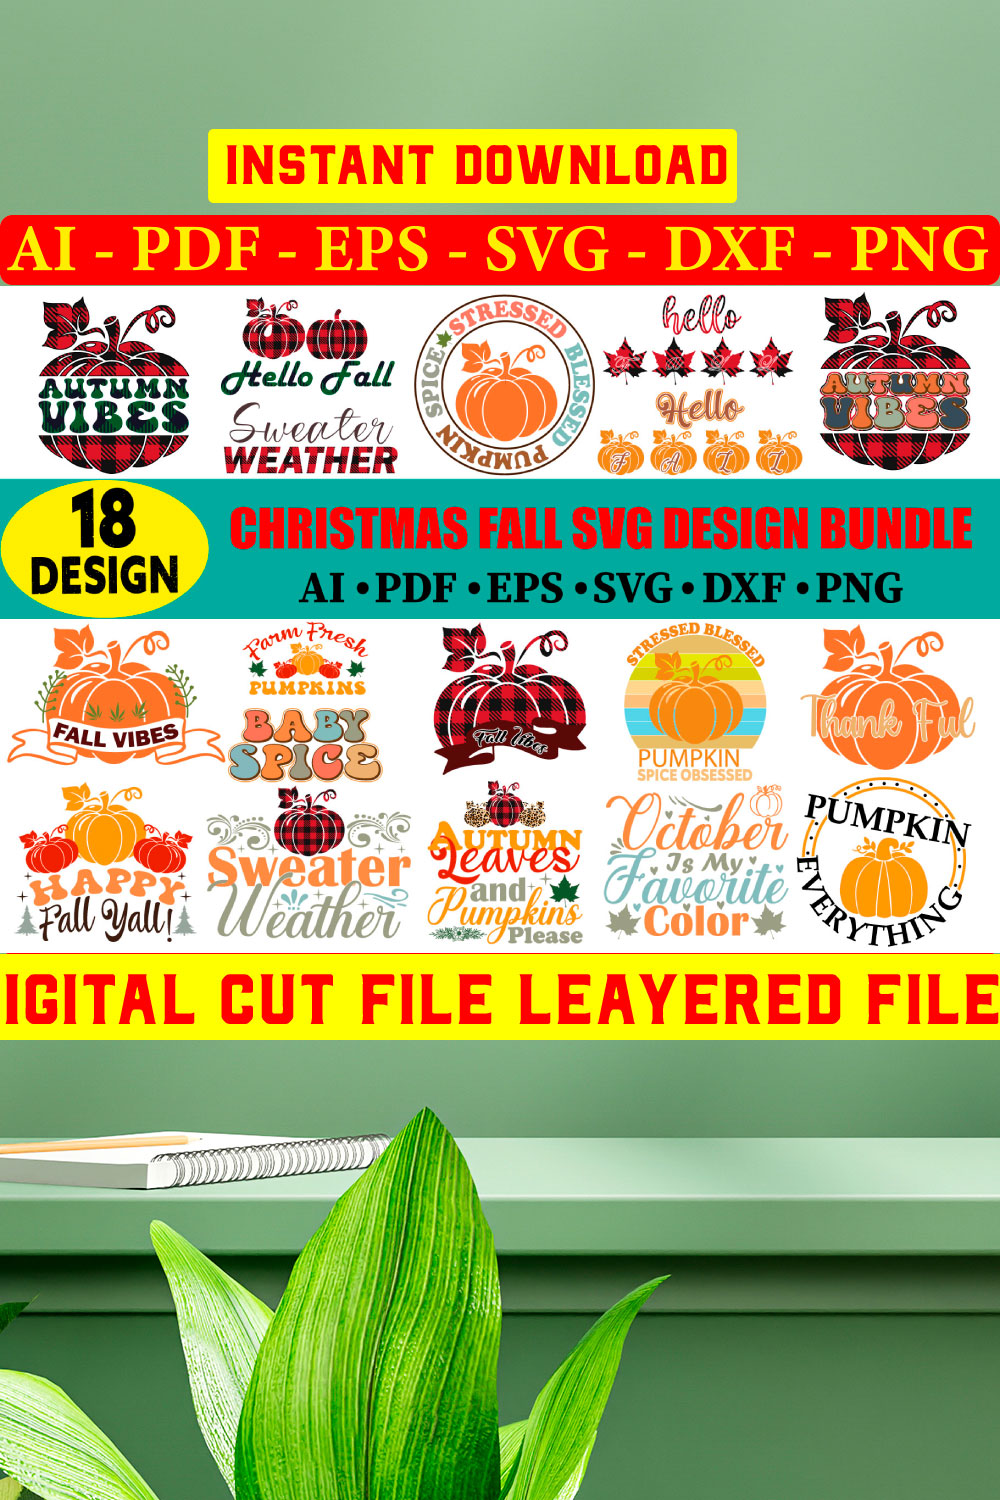 Fall SVG Design bundle pinterest preview image.